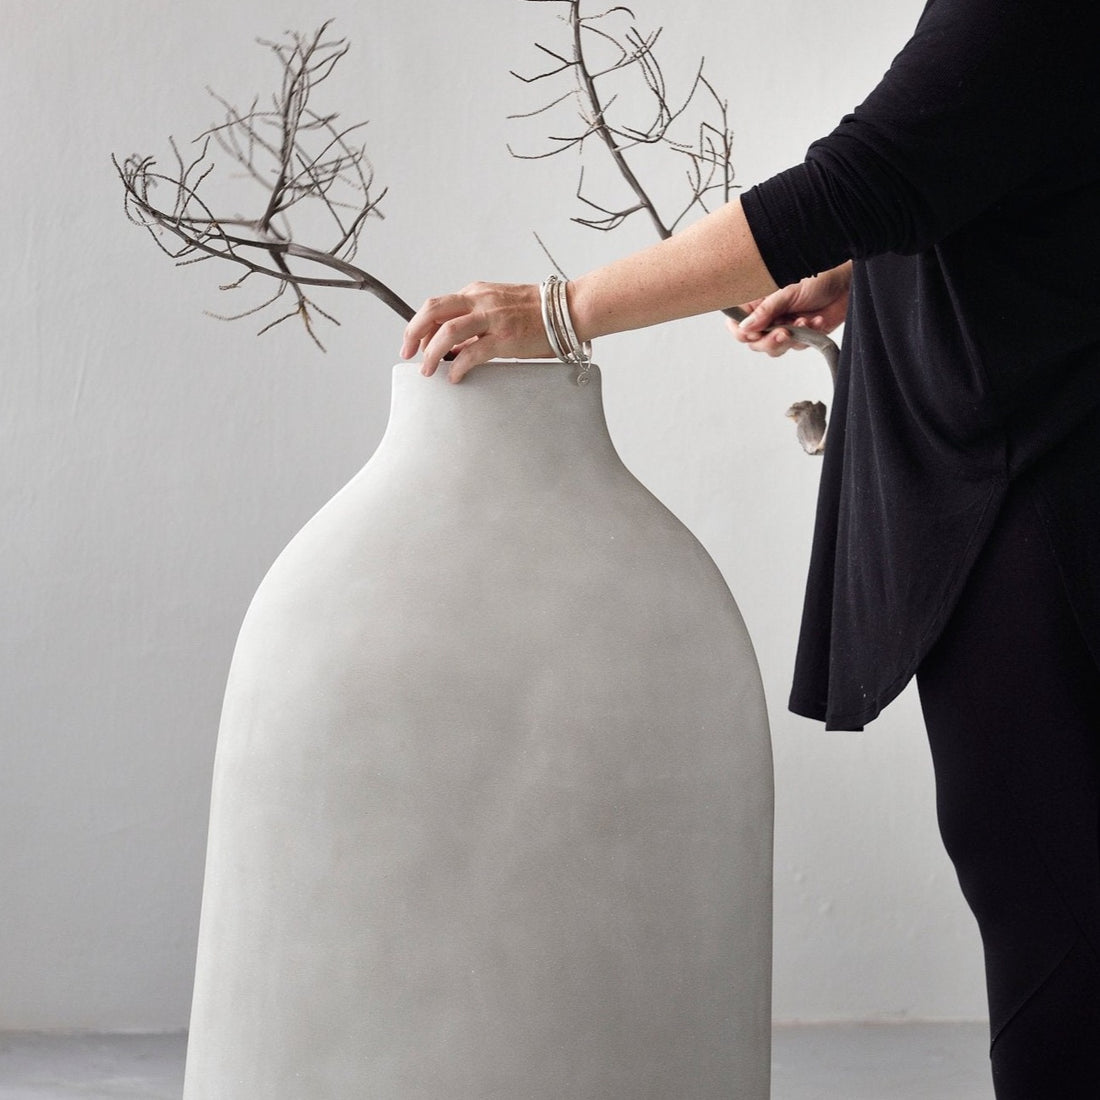 Stone Grey Curved Decorative Vase 